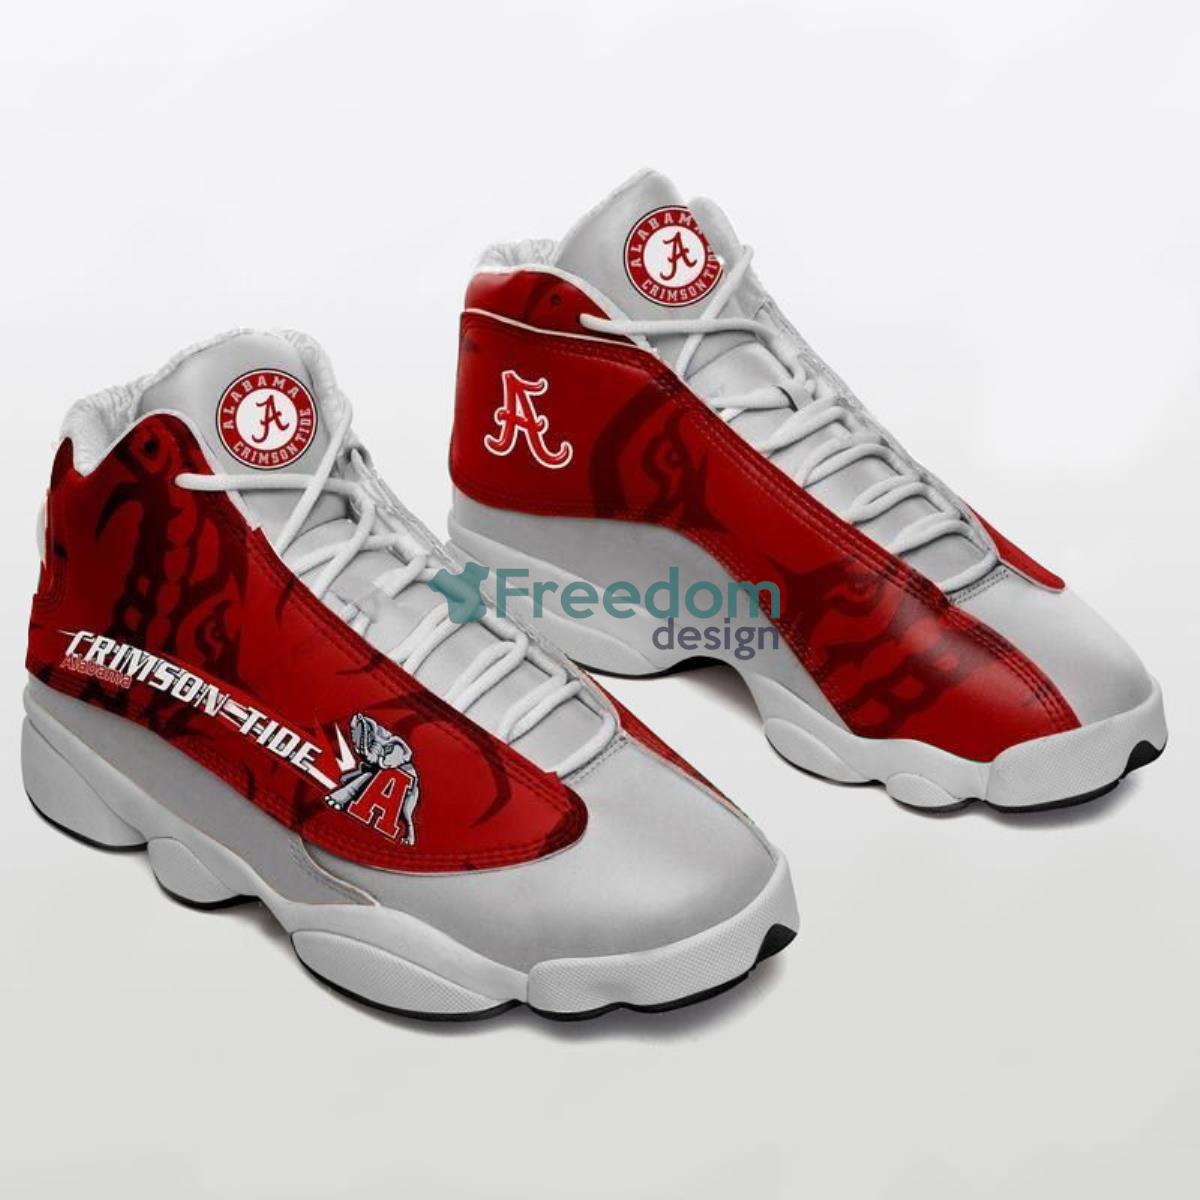 Alabama Crimson Tide Football Team Air Jordan 13 Shoes Product Photo 1